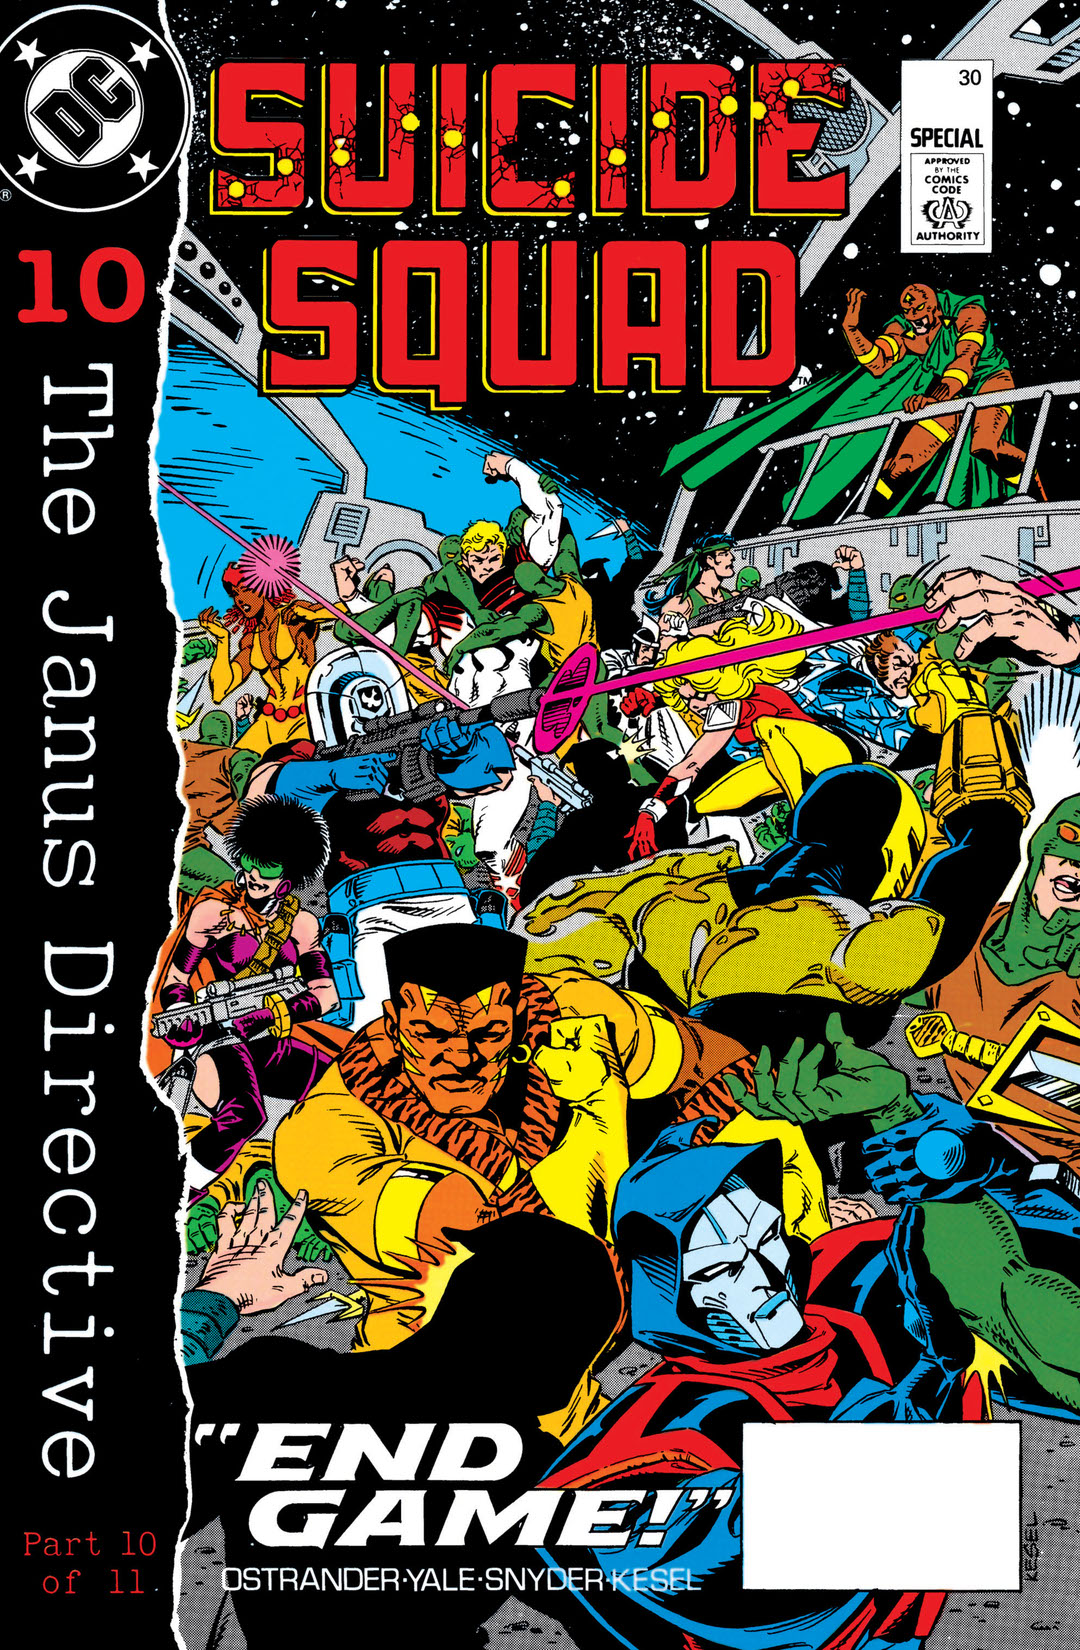 Suicide Squad (1987-) #30 preview images